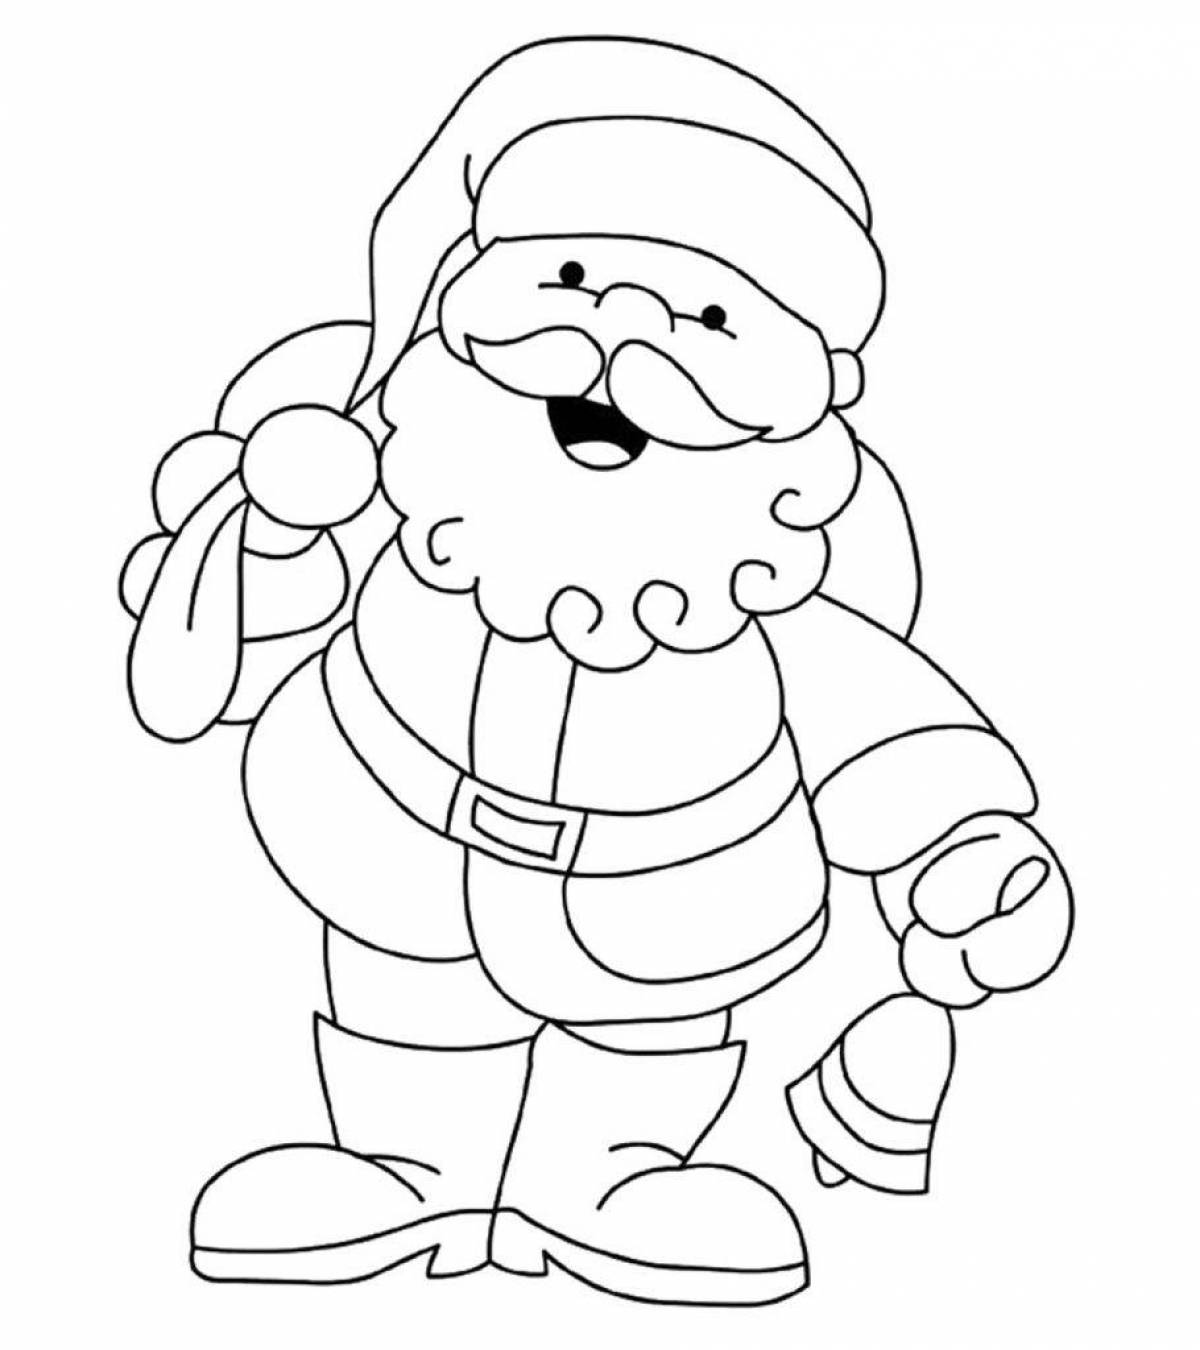 Live Santa Claus coloring book